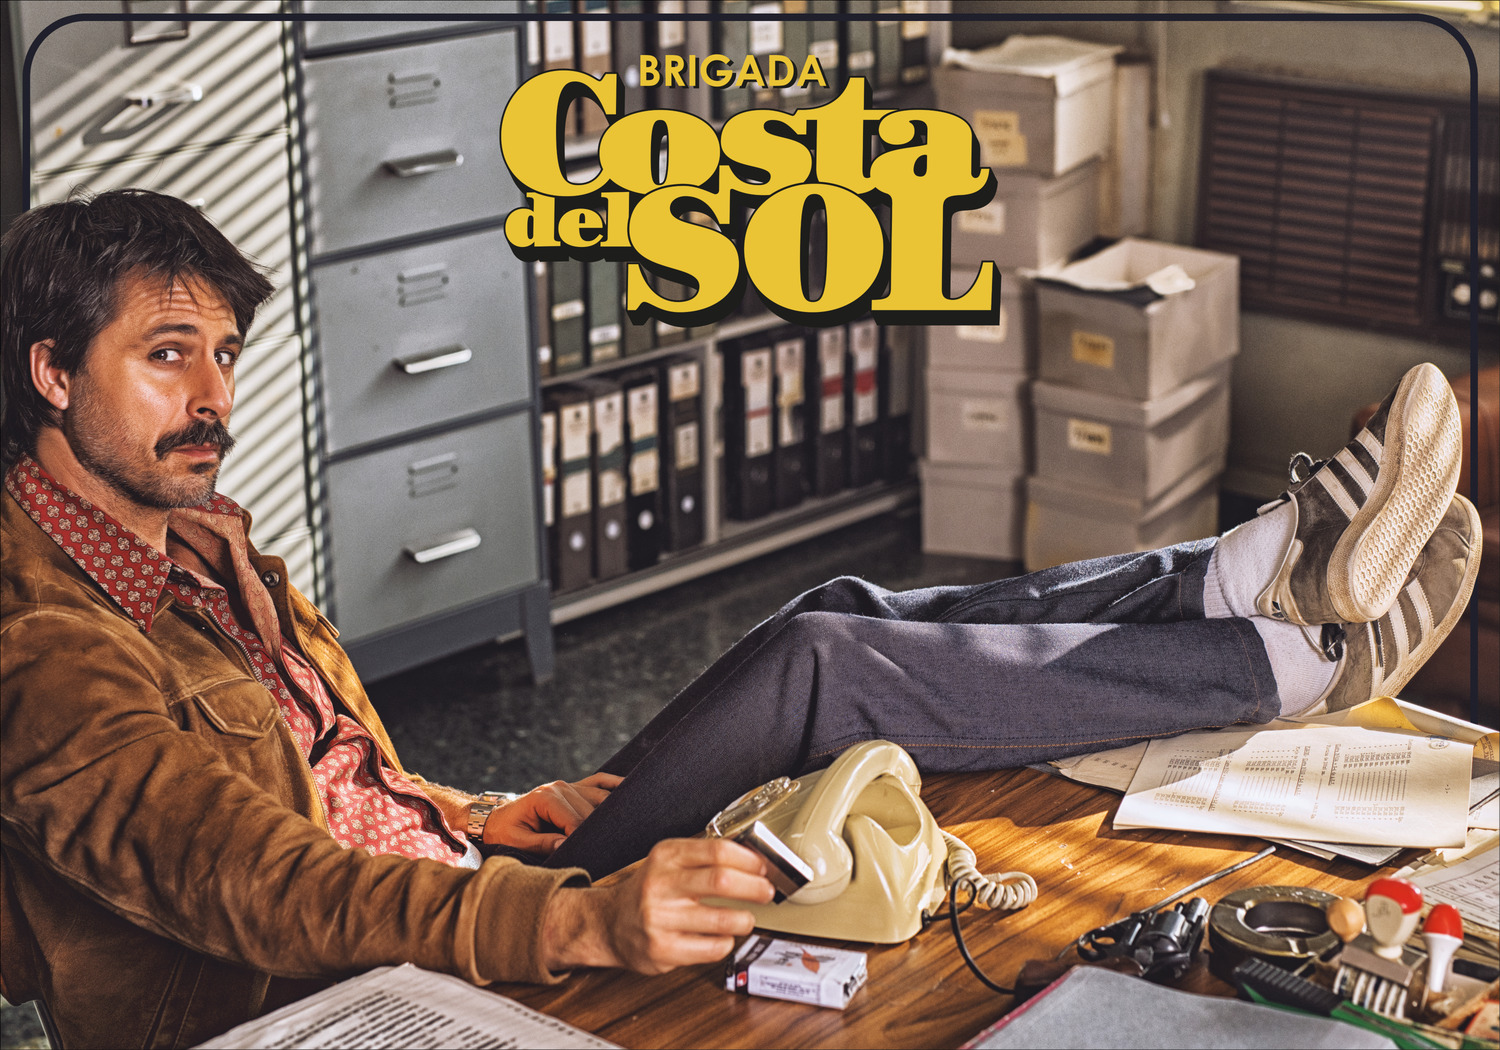 Extra Large TV Poster Image for Brigada Costa del Sol (#9 of 23)